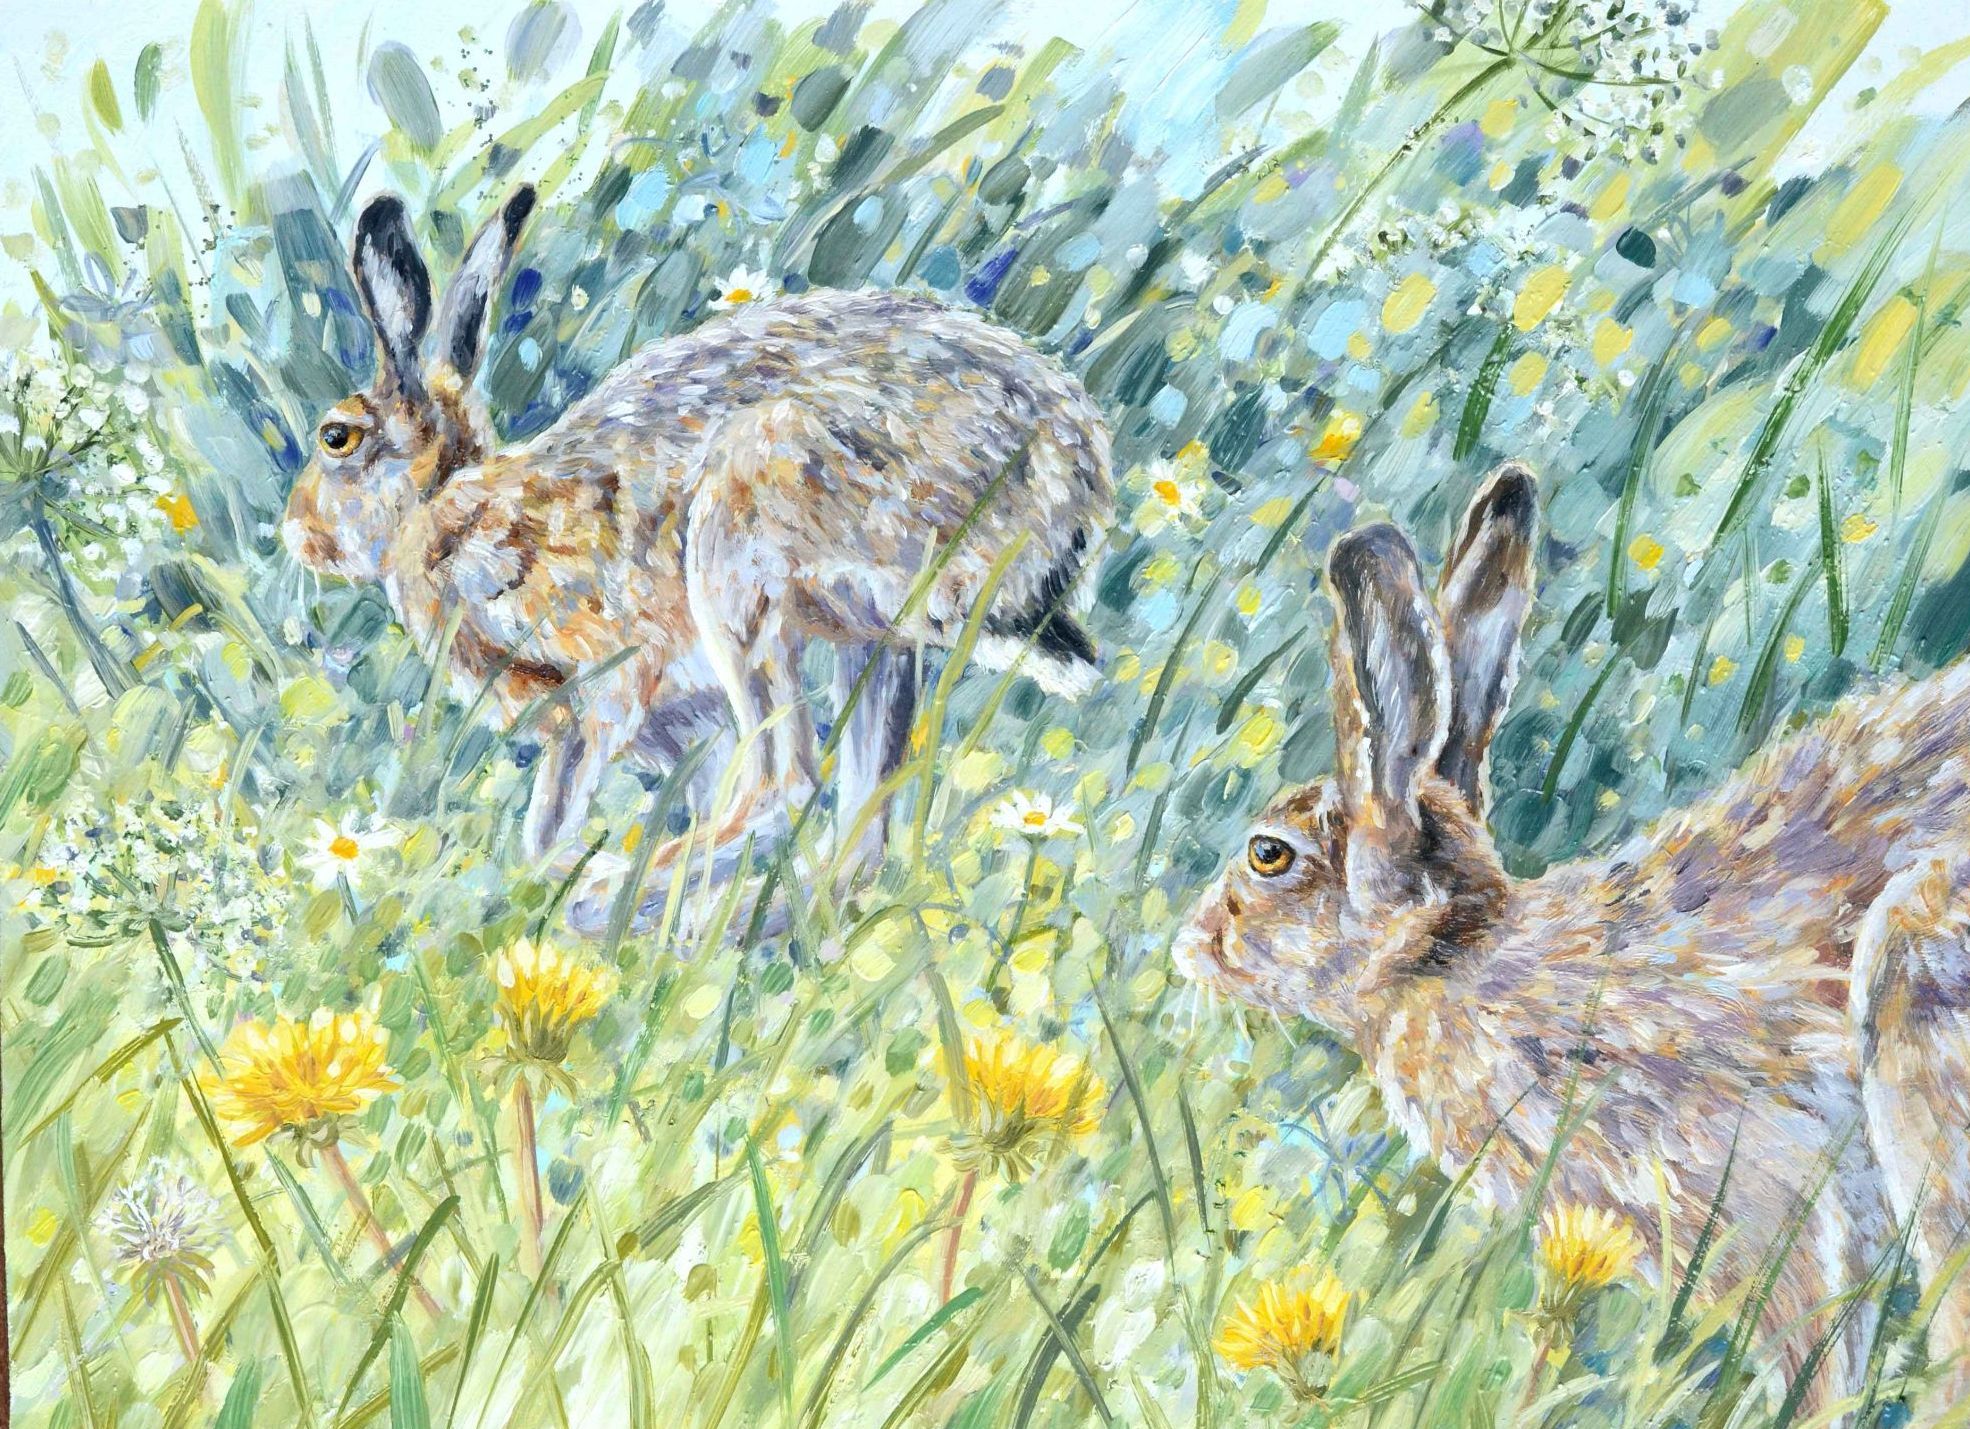 Hares on the run